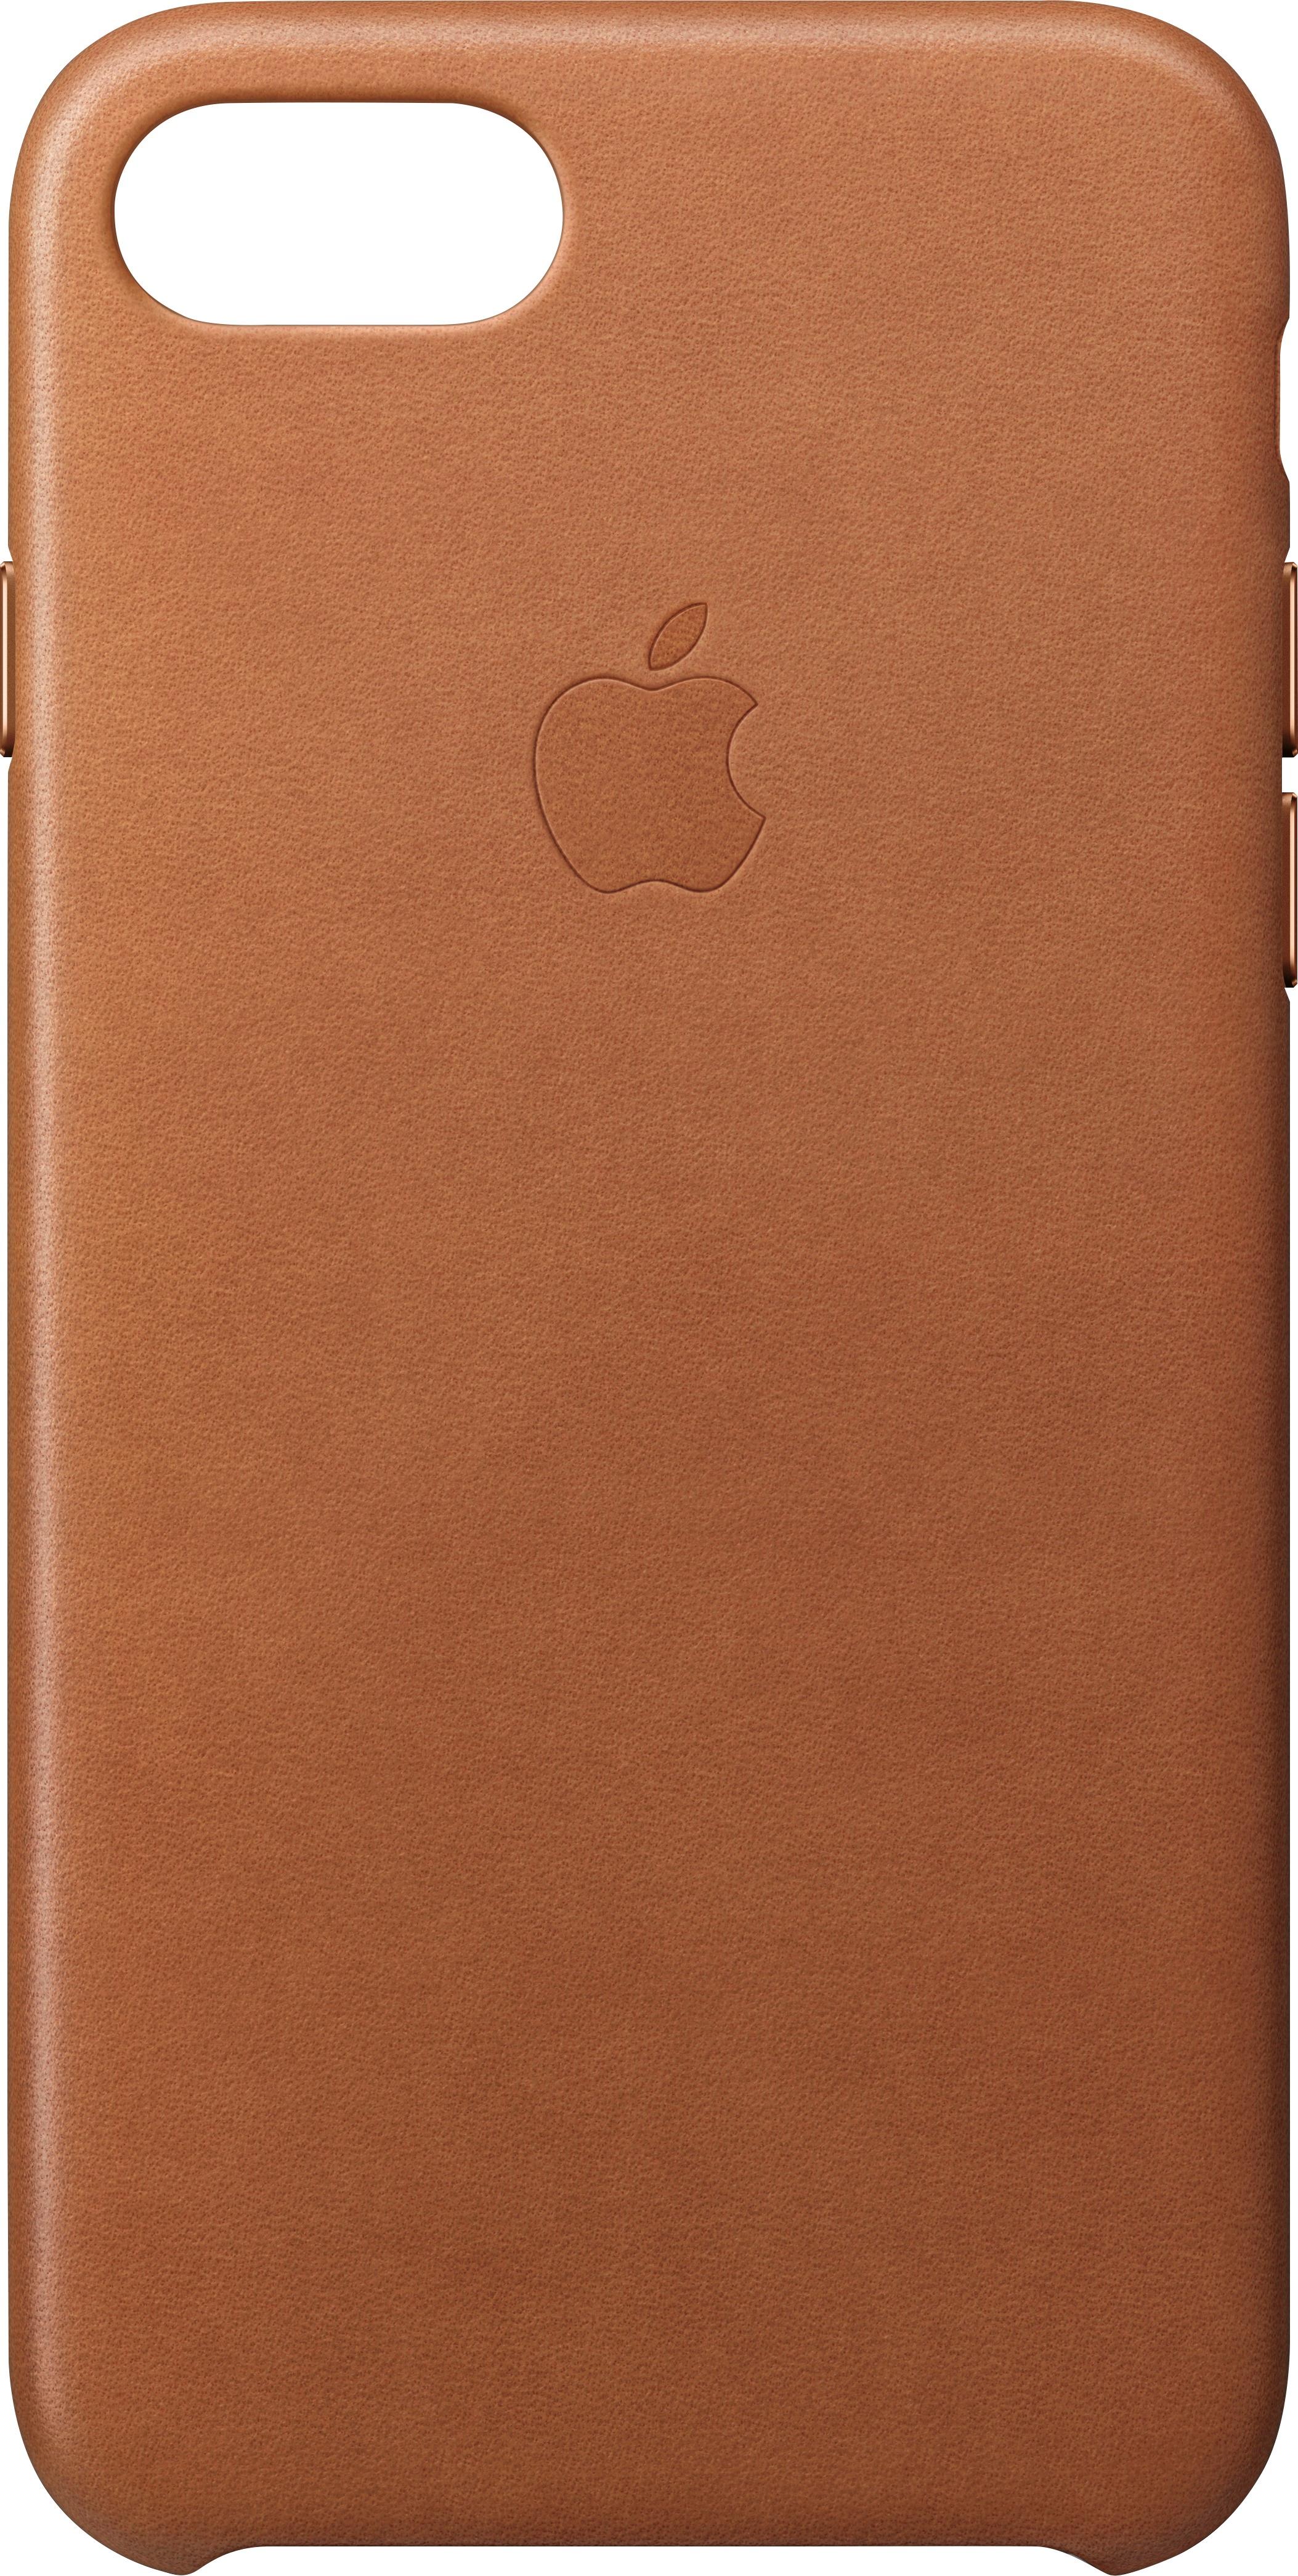 Apple iPhone® 8/7 Leather Case Saddle Best Buy